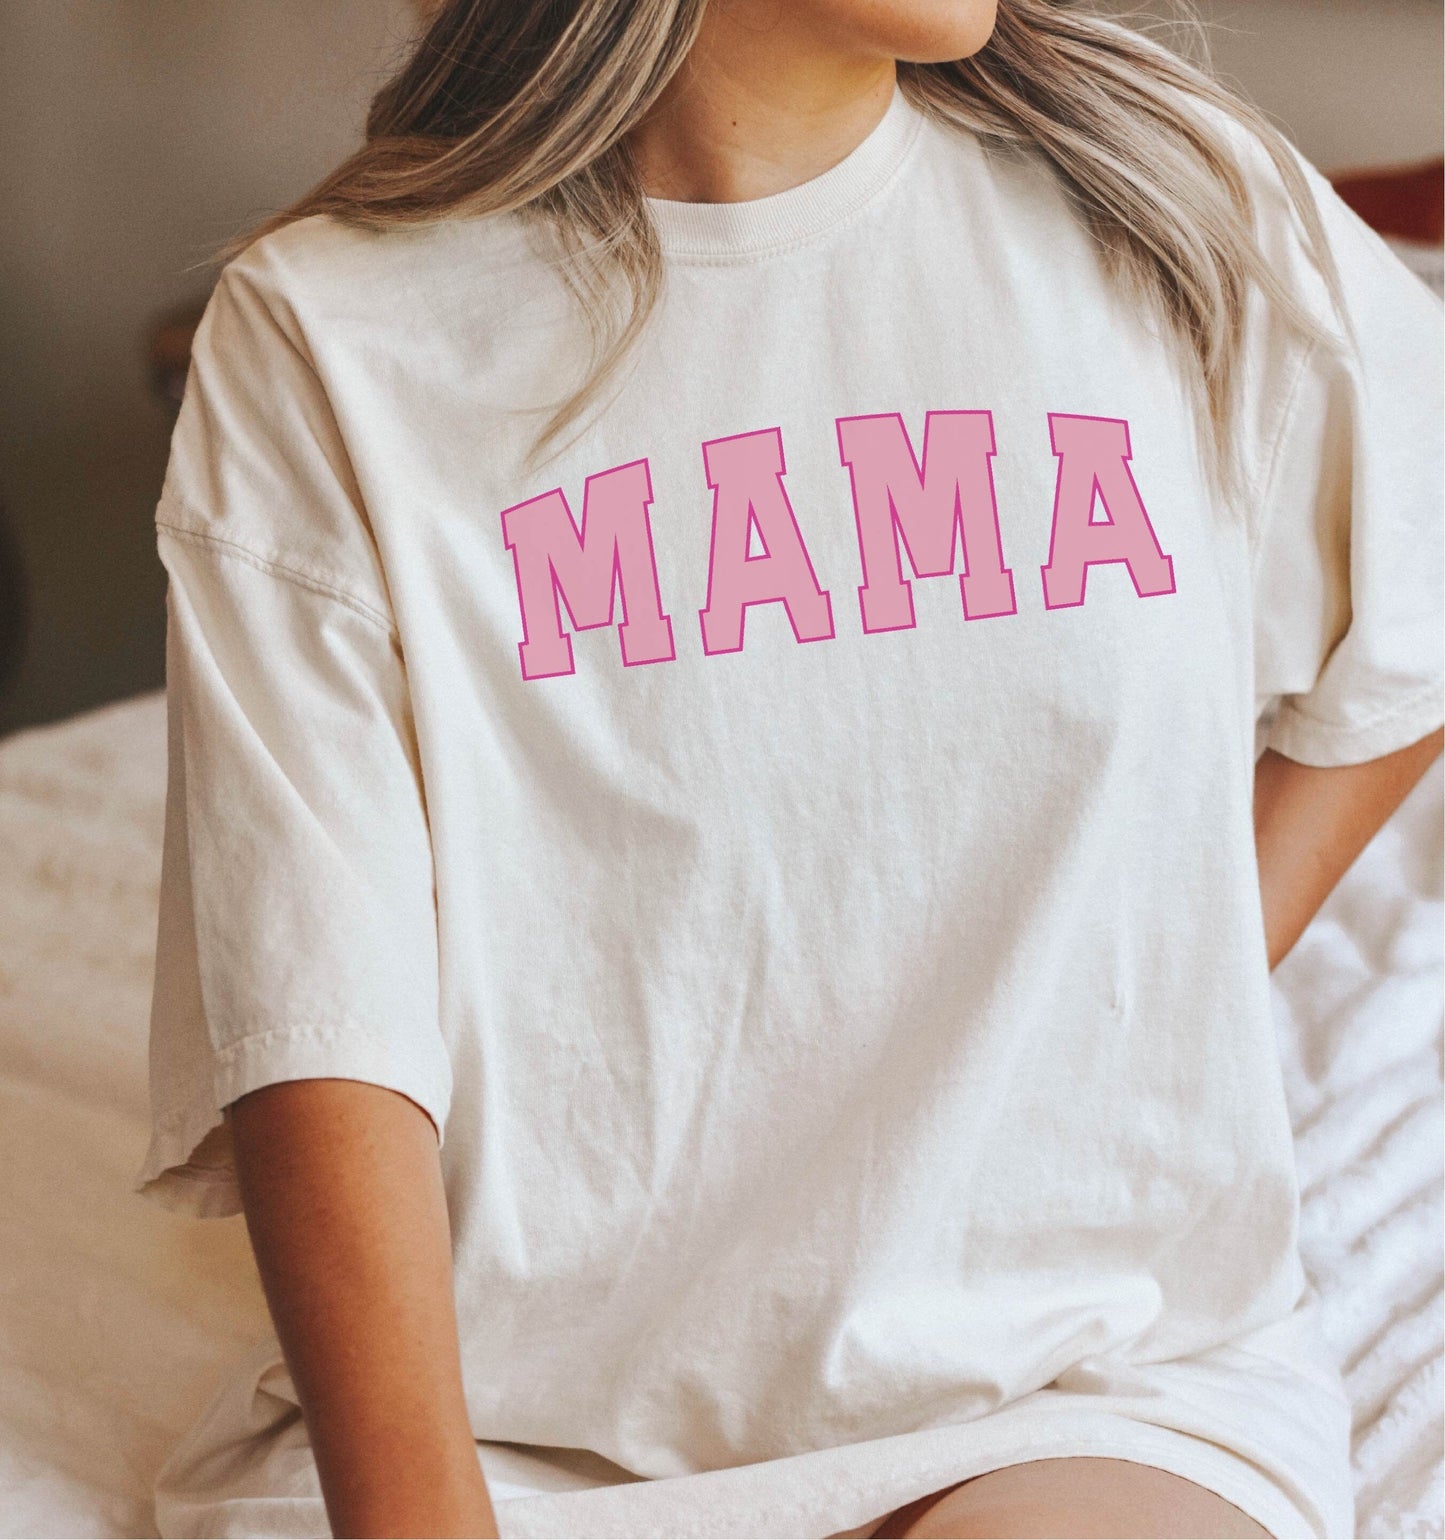 Mama Shirt, Vintage shirt, Loungewear, Graphic Tee, Gift for Mom, Mama T Shirt, Pajama Shirt, Cozy shirt, Comfort Colors